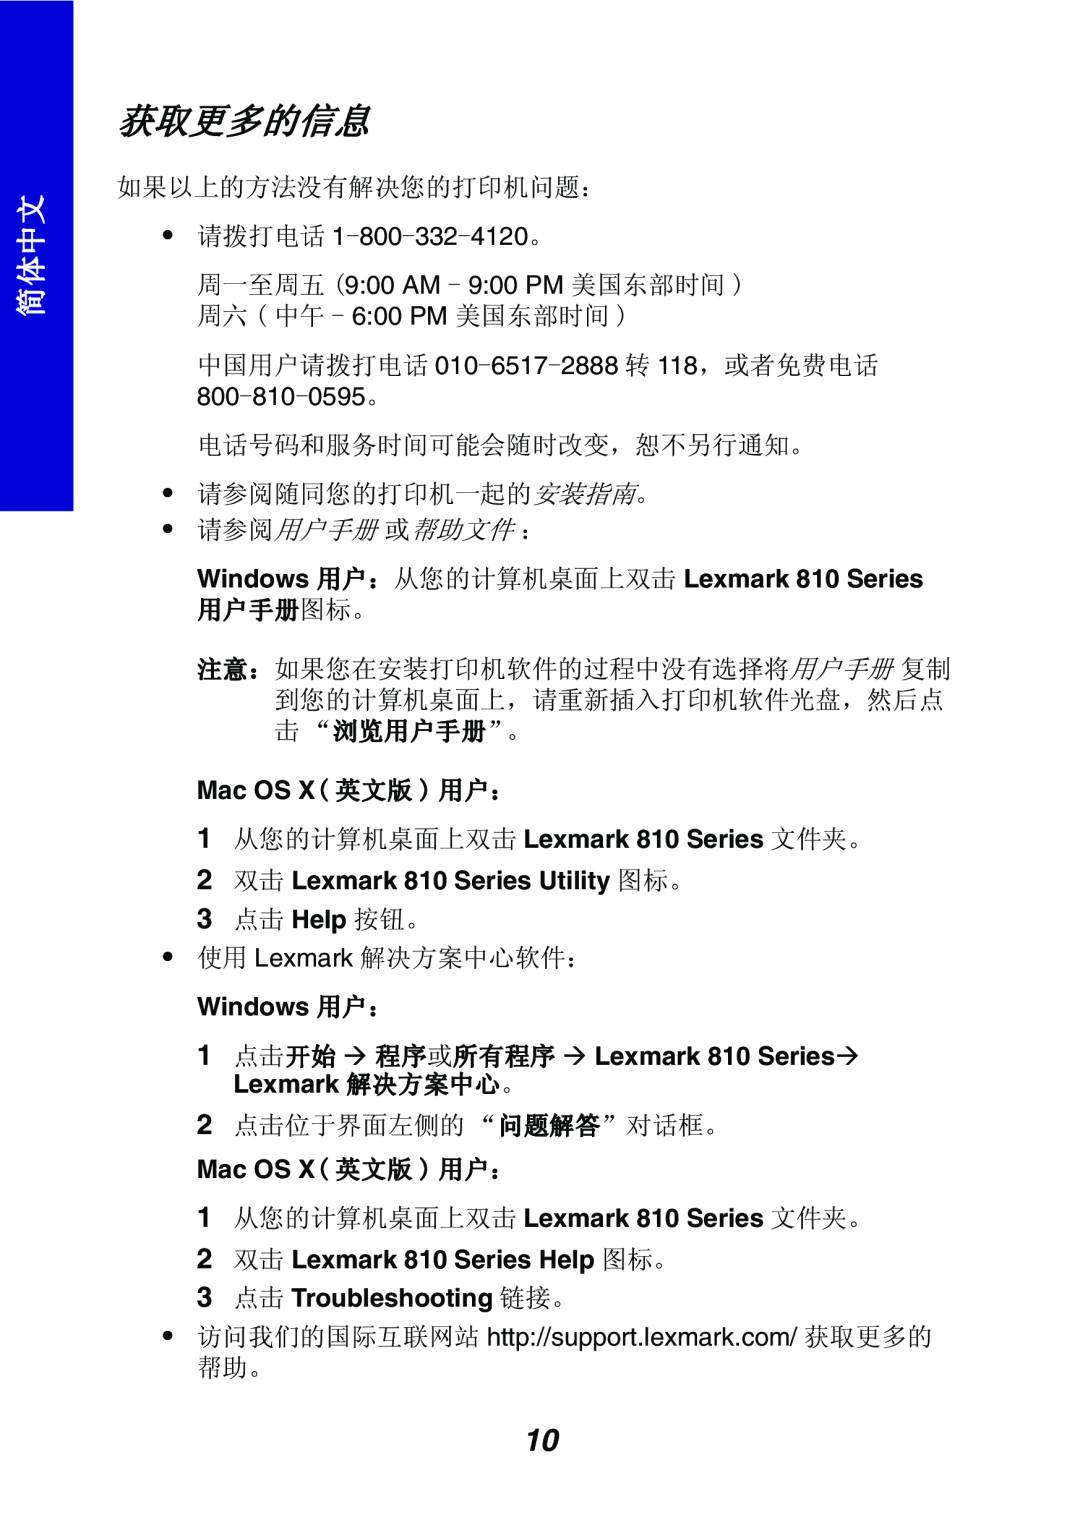 Lexmark manual Windows -wx˜‹=t Lexmark 810 Series š›, 2t Lexmark 810 Series Utility š›, 2t Lexmark 810 Series Help š› 